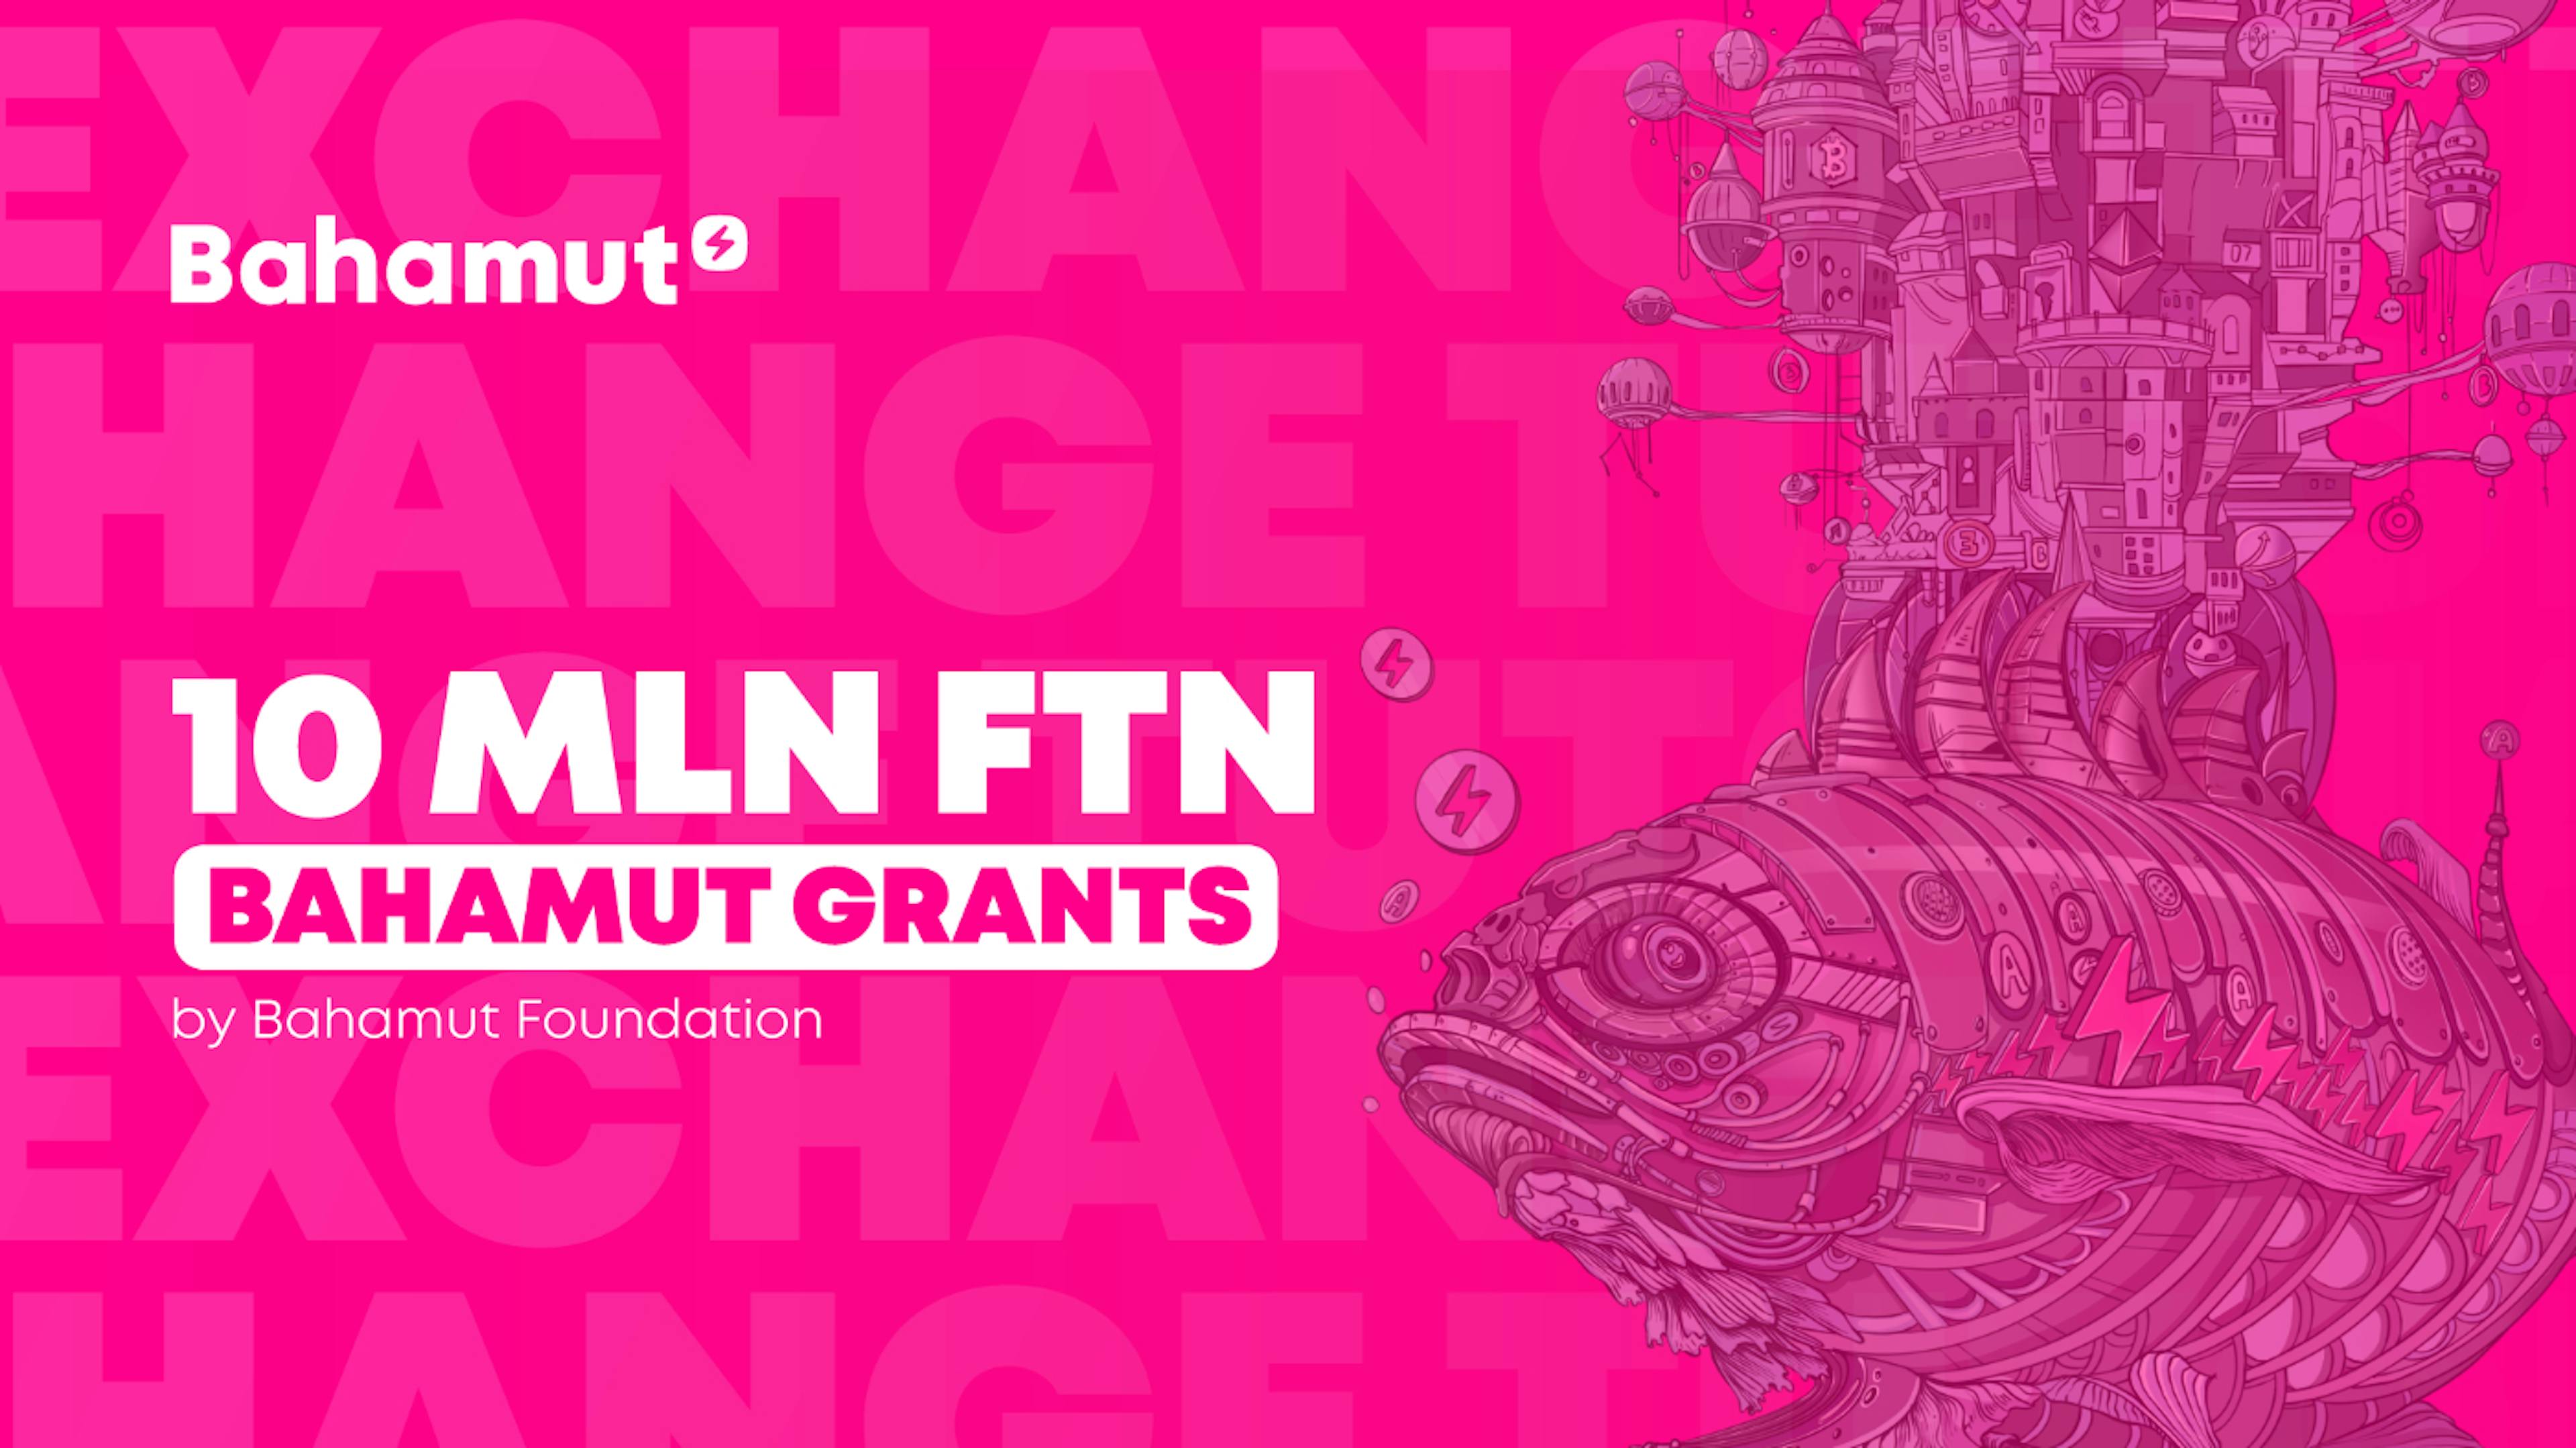 featured image - Bahamut Foundation Announces Launch of 10 Million $FTN Bahamut Grants Program for Development